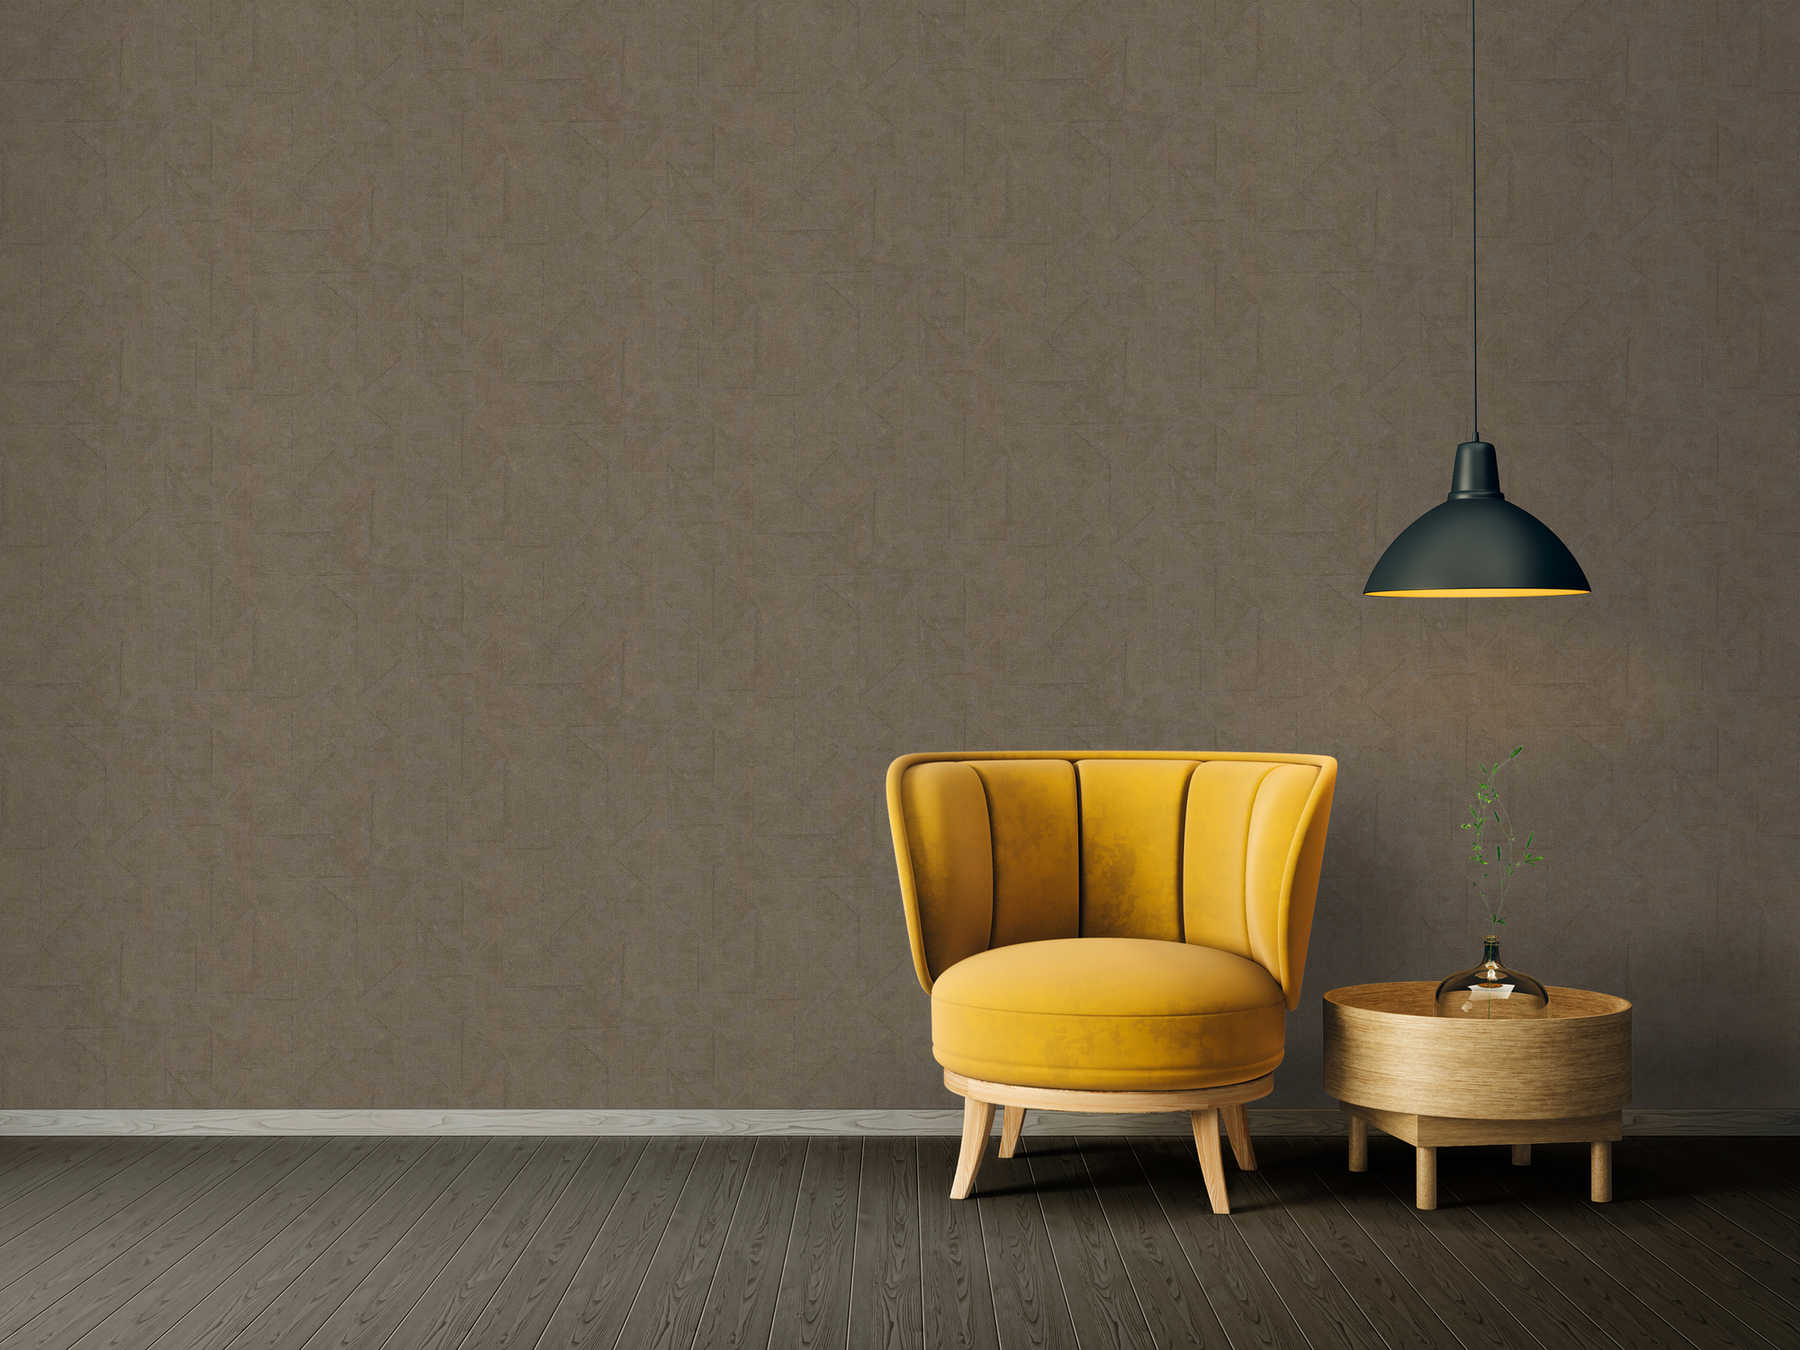             Wallpaper Mediterranean style, patterned - brown, bronze, grey
        